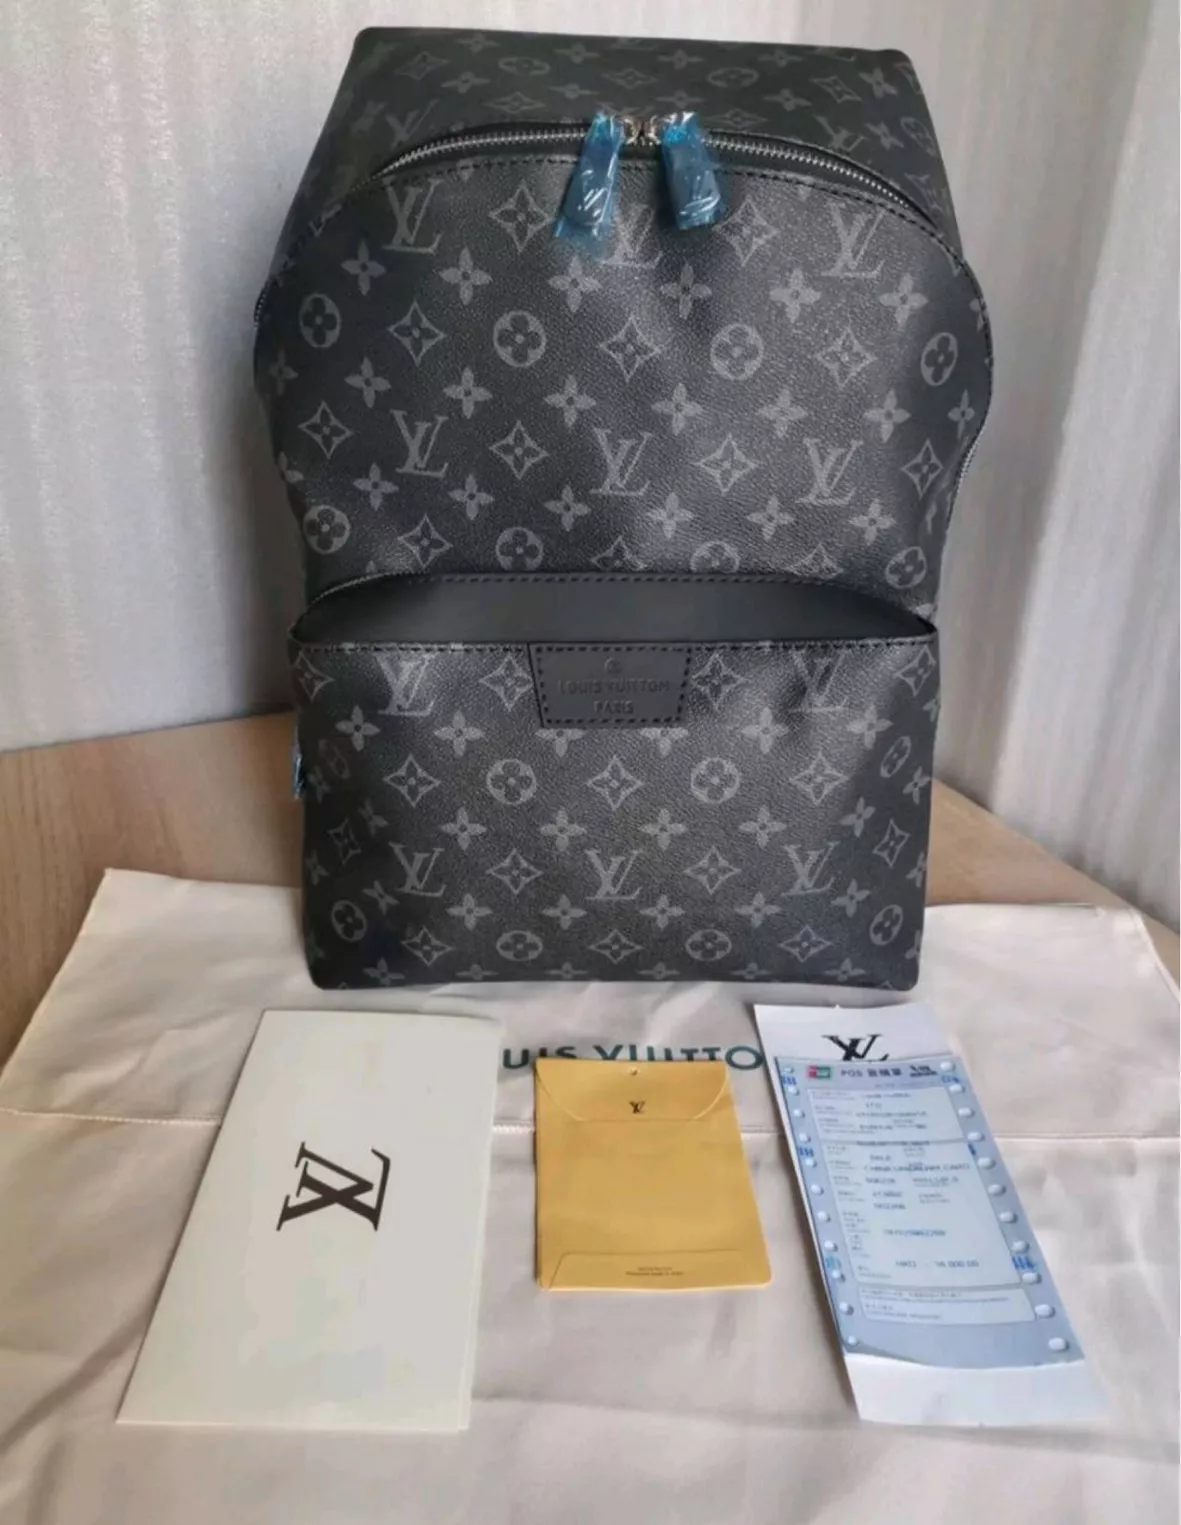 Louis Vuitton Mens Backpack Dhgate